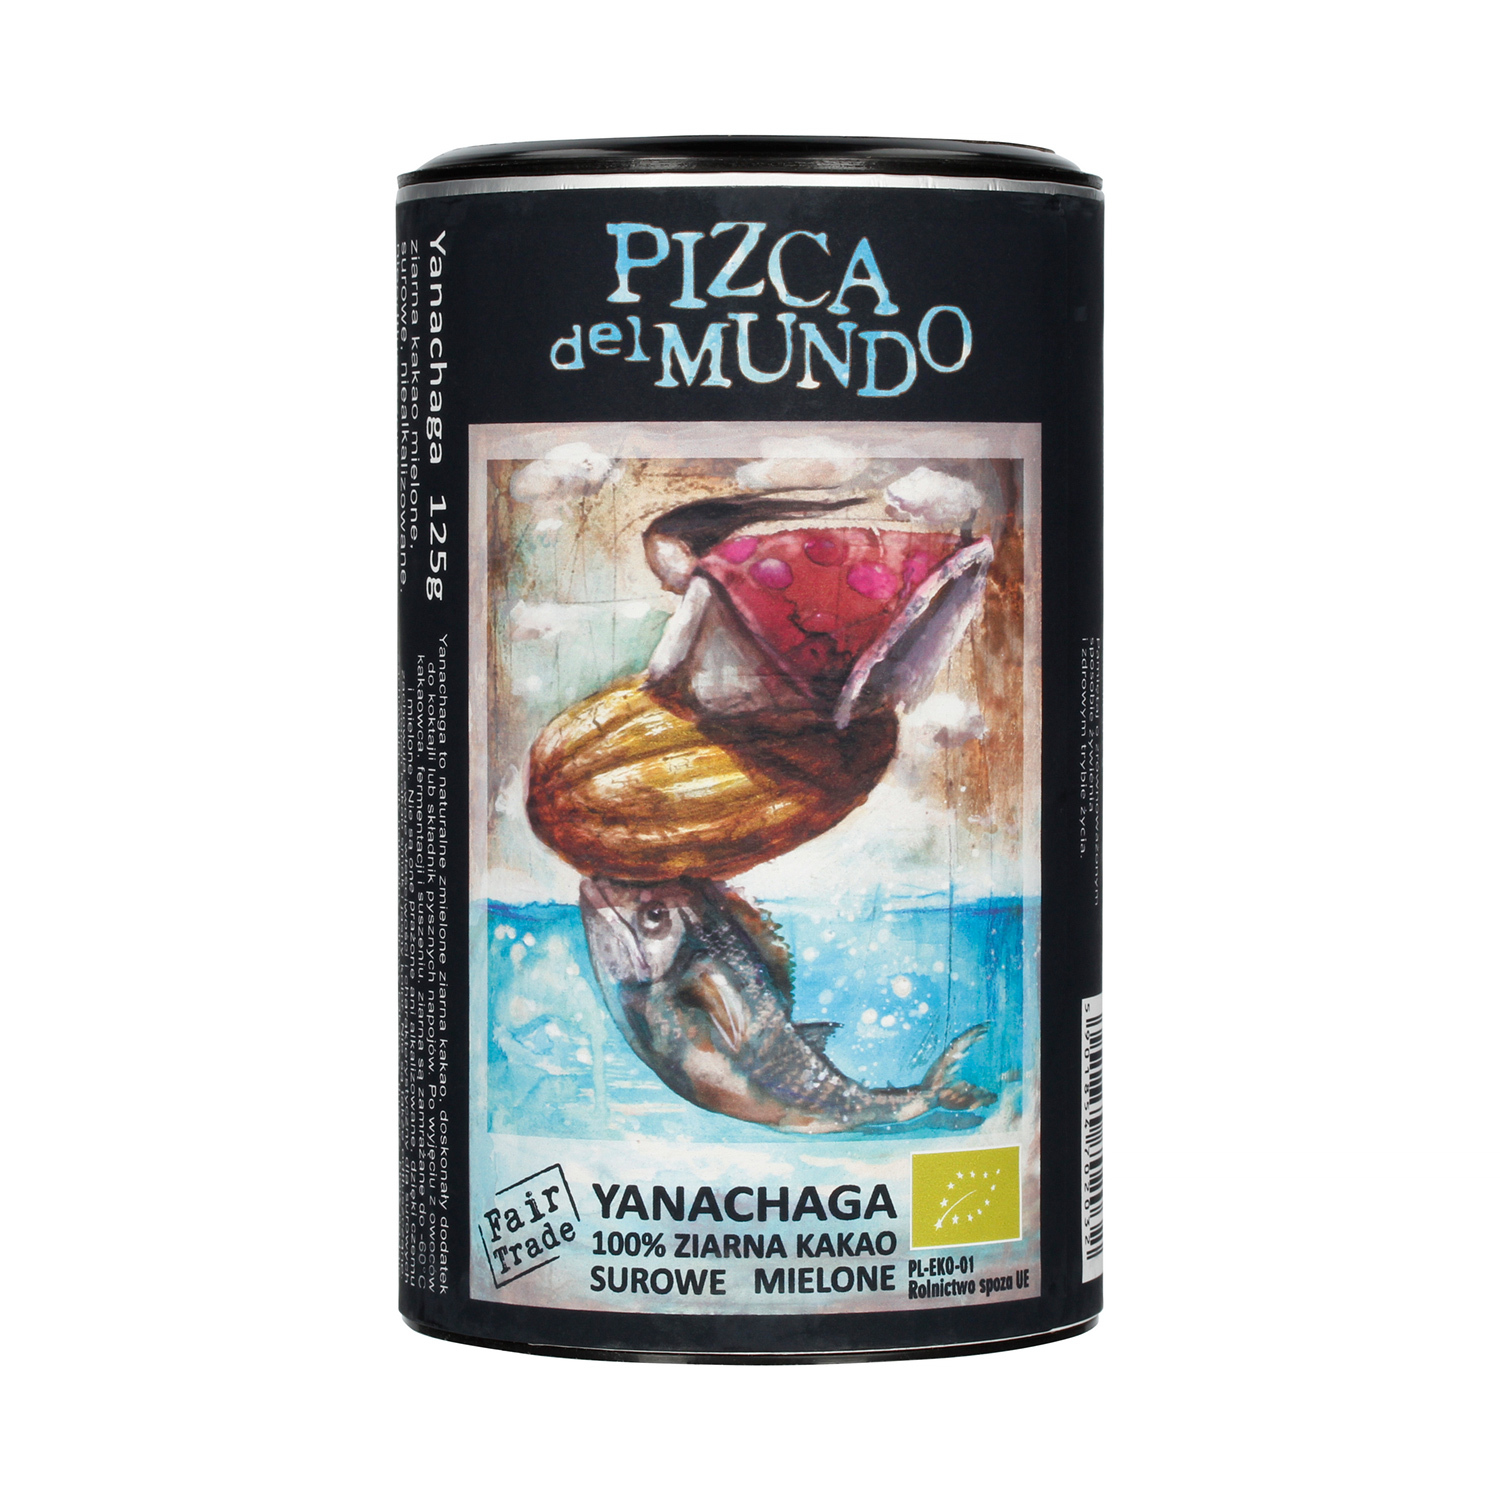 Pizca del Mundo - Yanachaga - 100% surowe mielone kakao nieodtłuszczone 125g